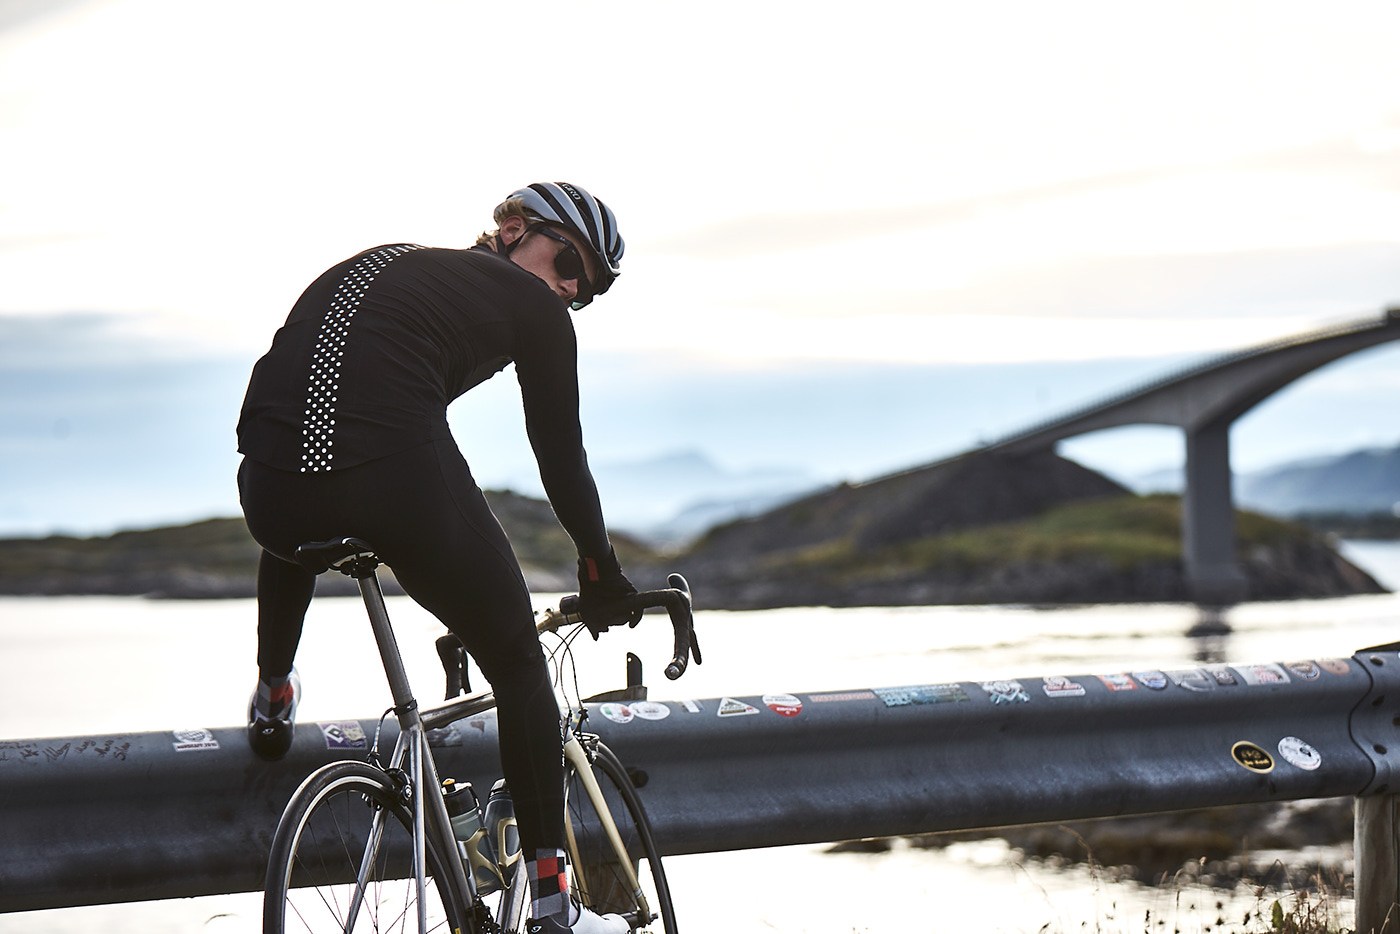 Adobe Portfolio ashmei cycle cycle Triathlon Sportswear design